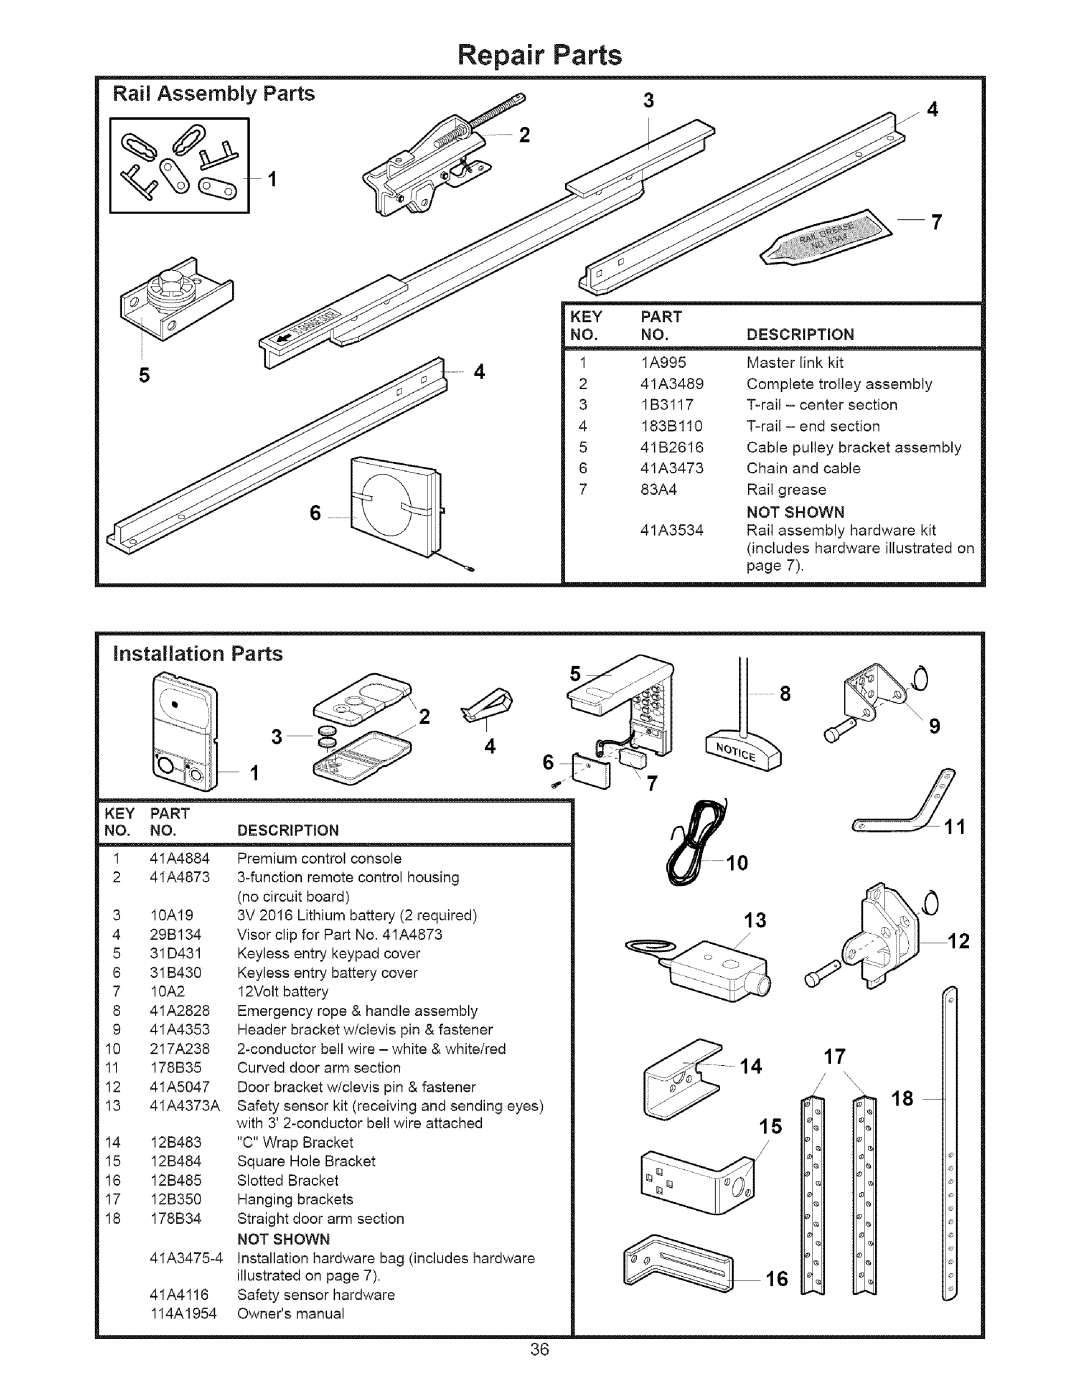 Sears 139.53535SRT1 operating instructions Repair Parts, Rail AssemblyParts, Installation Parts, 1418, Description 